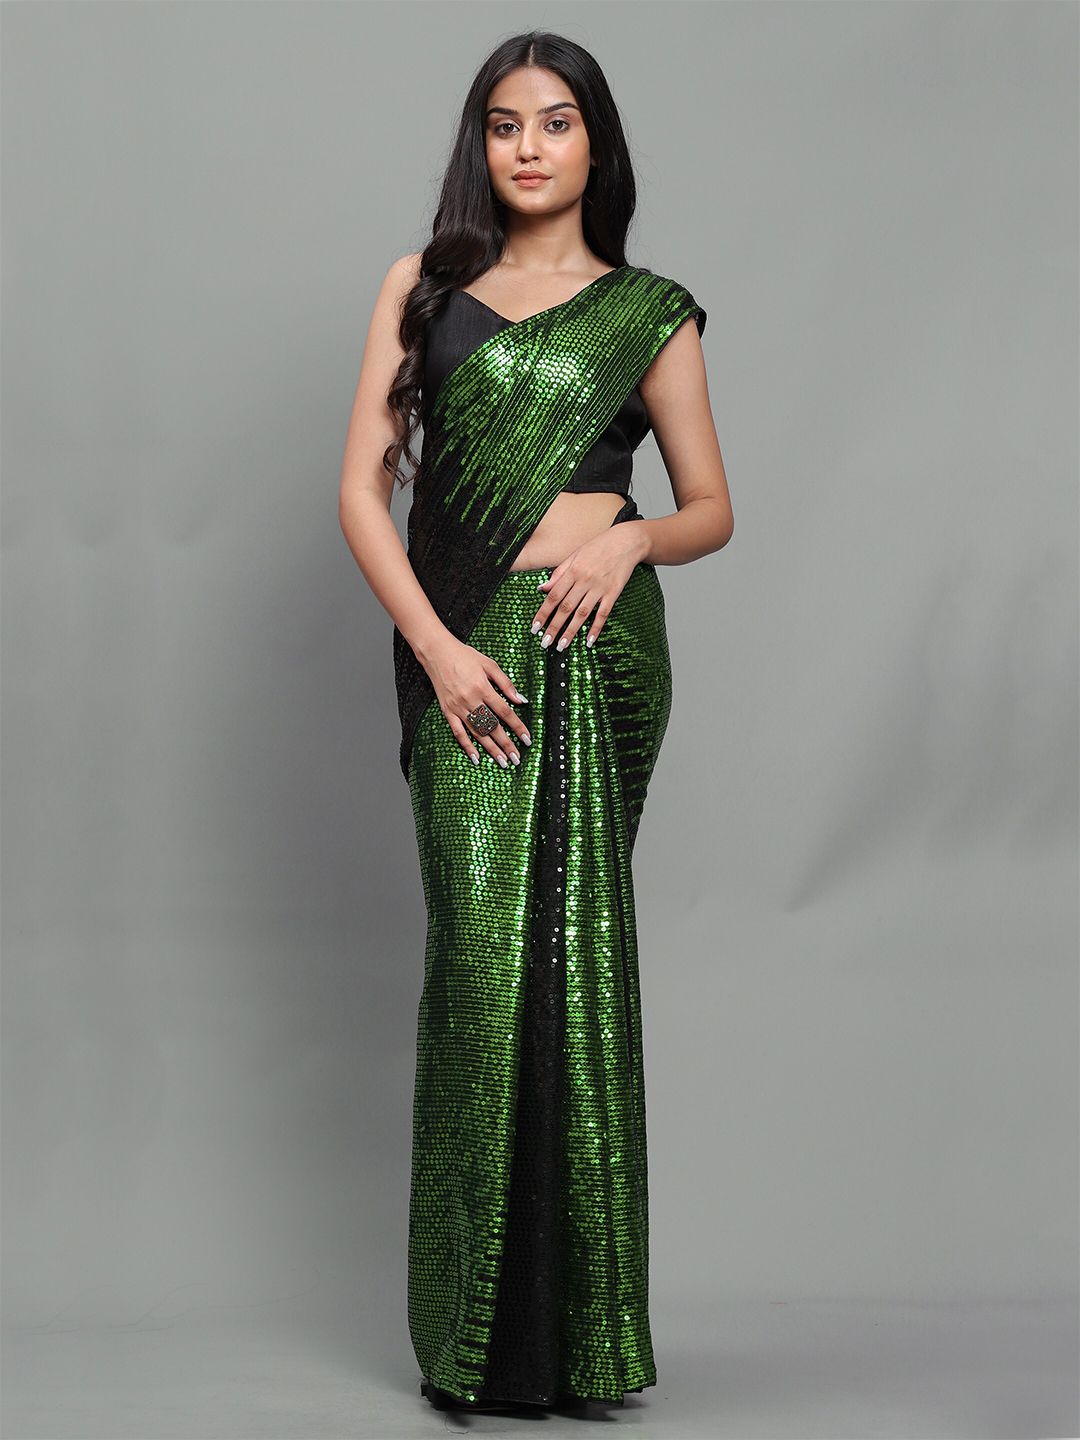 3BUDDY FASHION Green & Black Embellished Sequinned Dharmavaram Saree Price in India